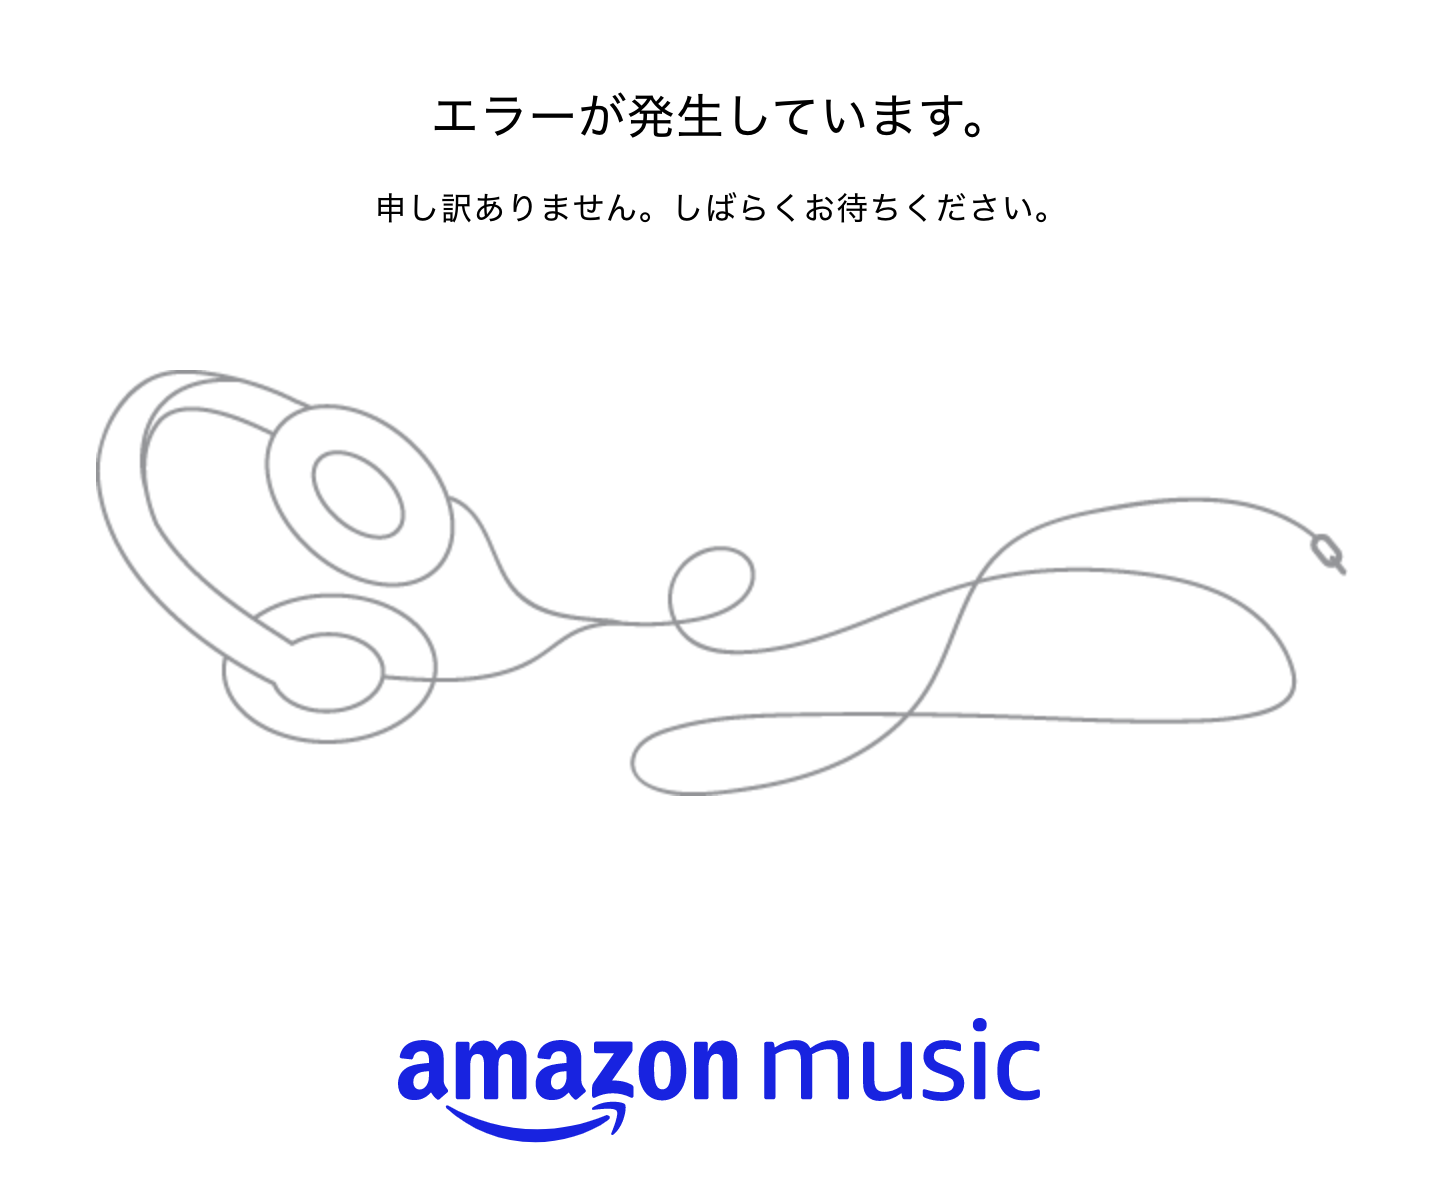 Amazon プライムミュージック で音楽が聴けない時に確認したい項目 あいしんくいっと